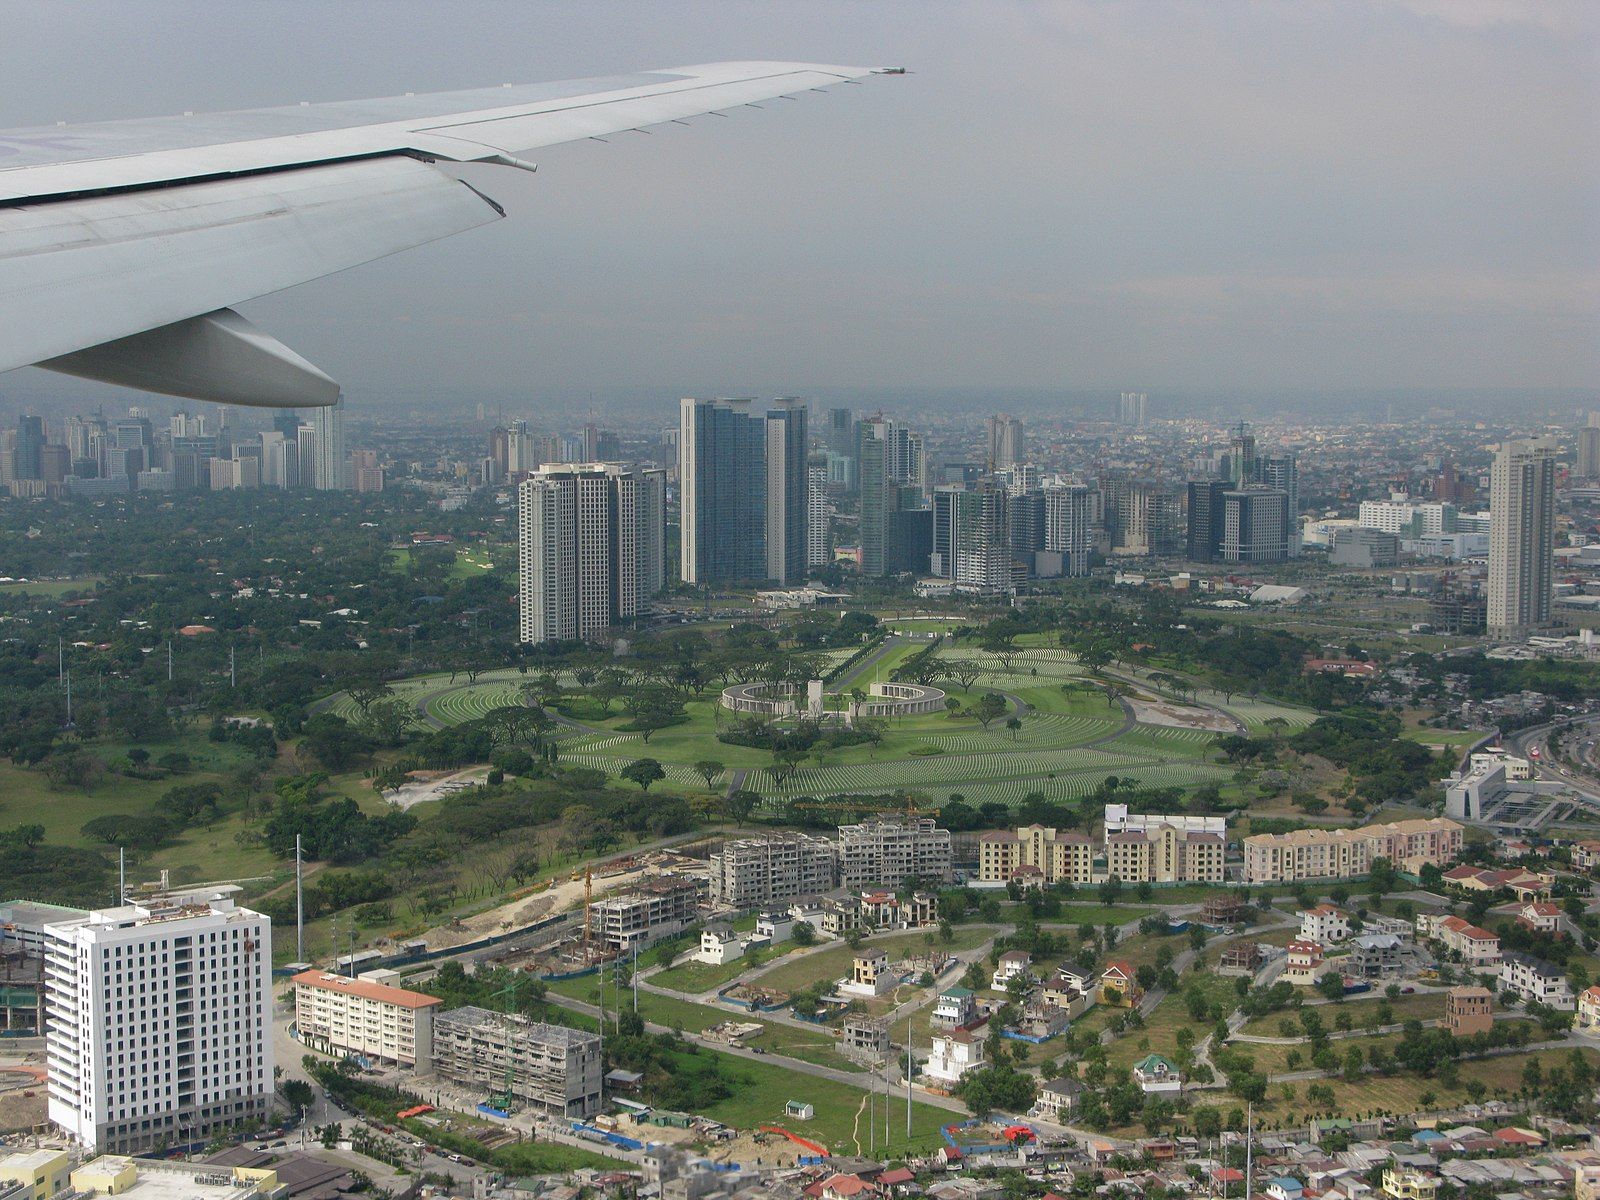 Manila skyline seen from plane window